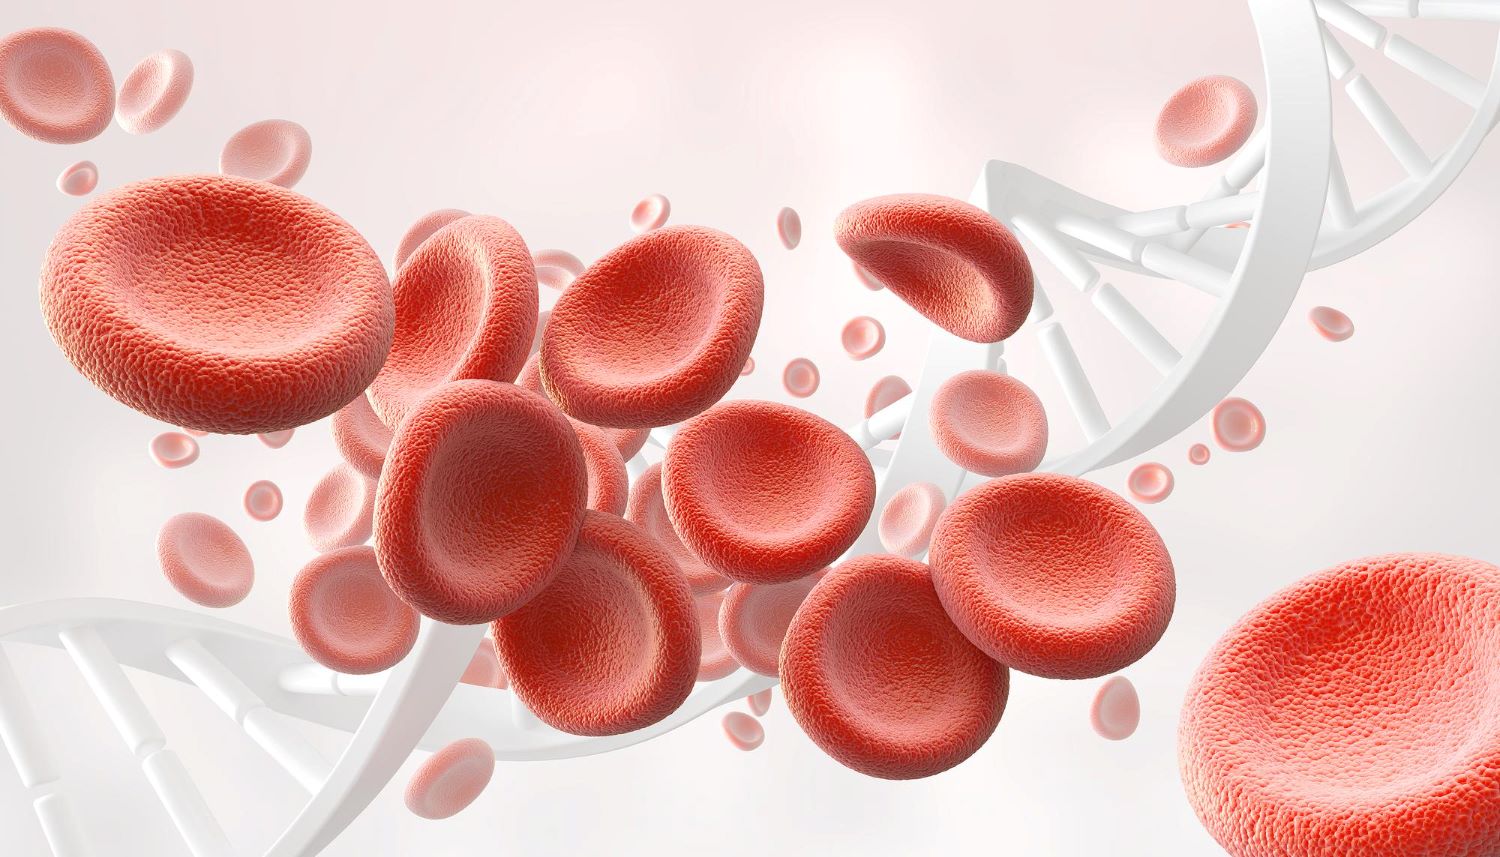 3d illustration of human red blood cells